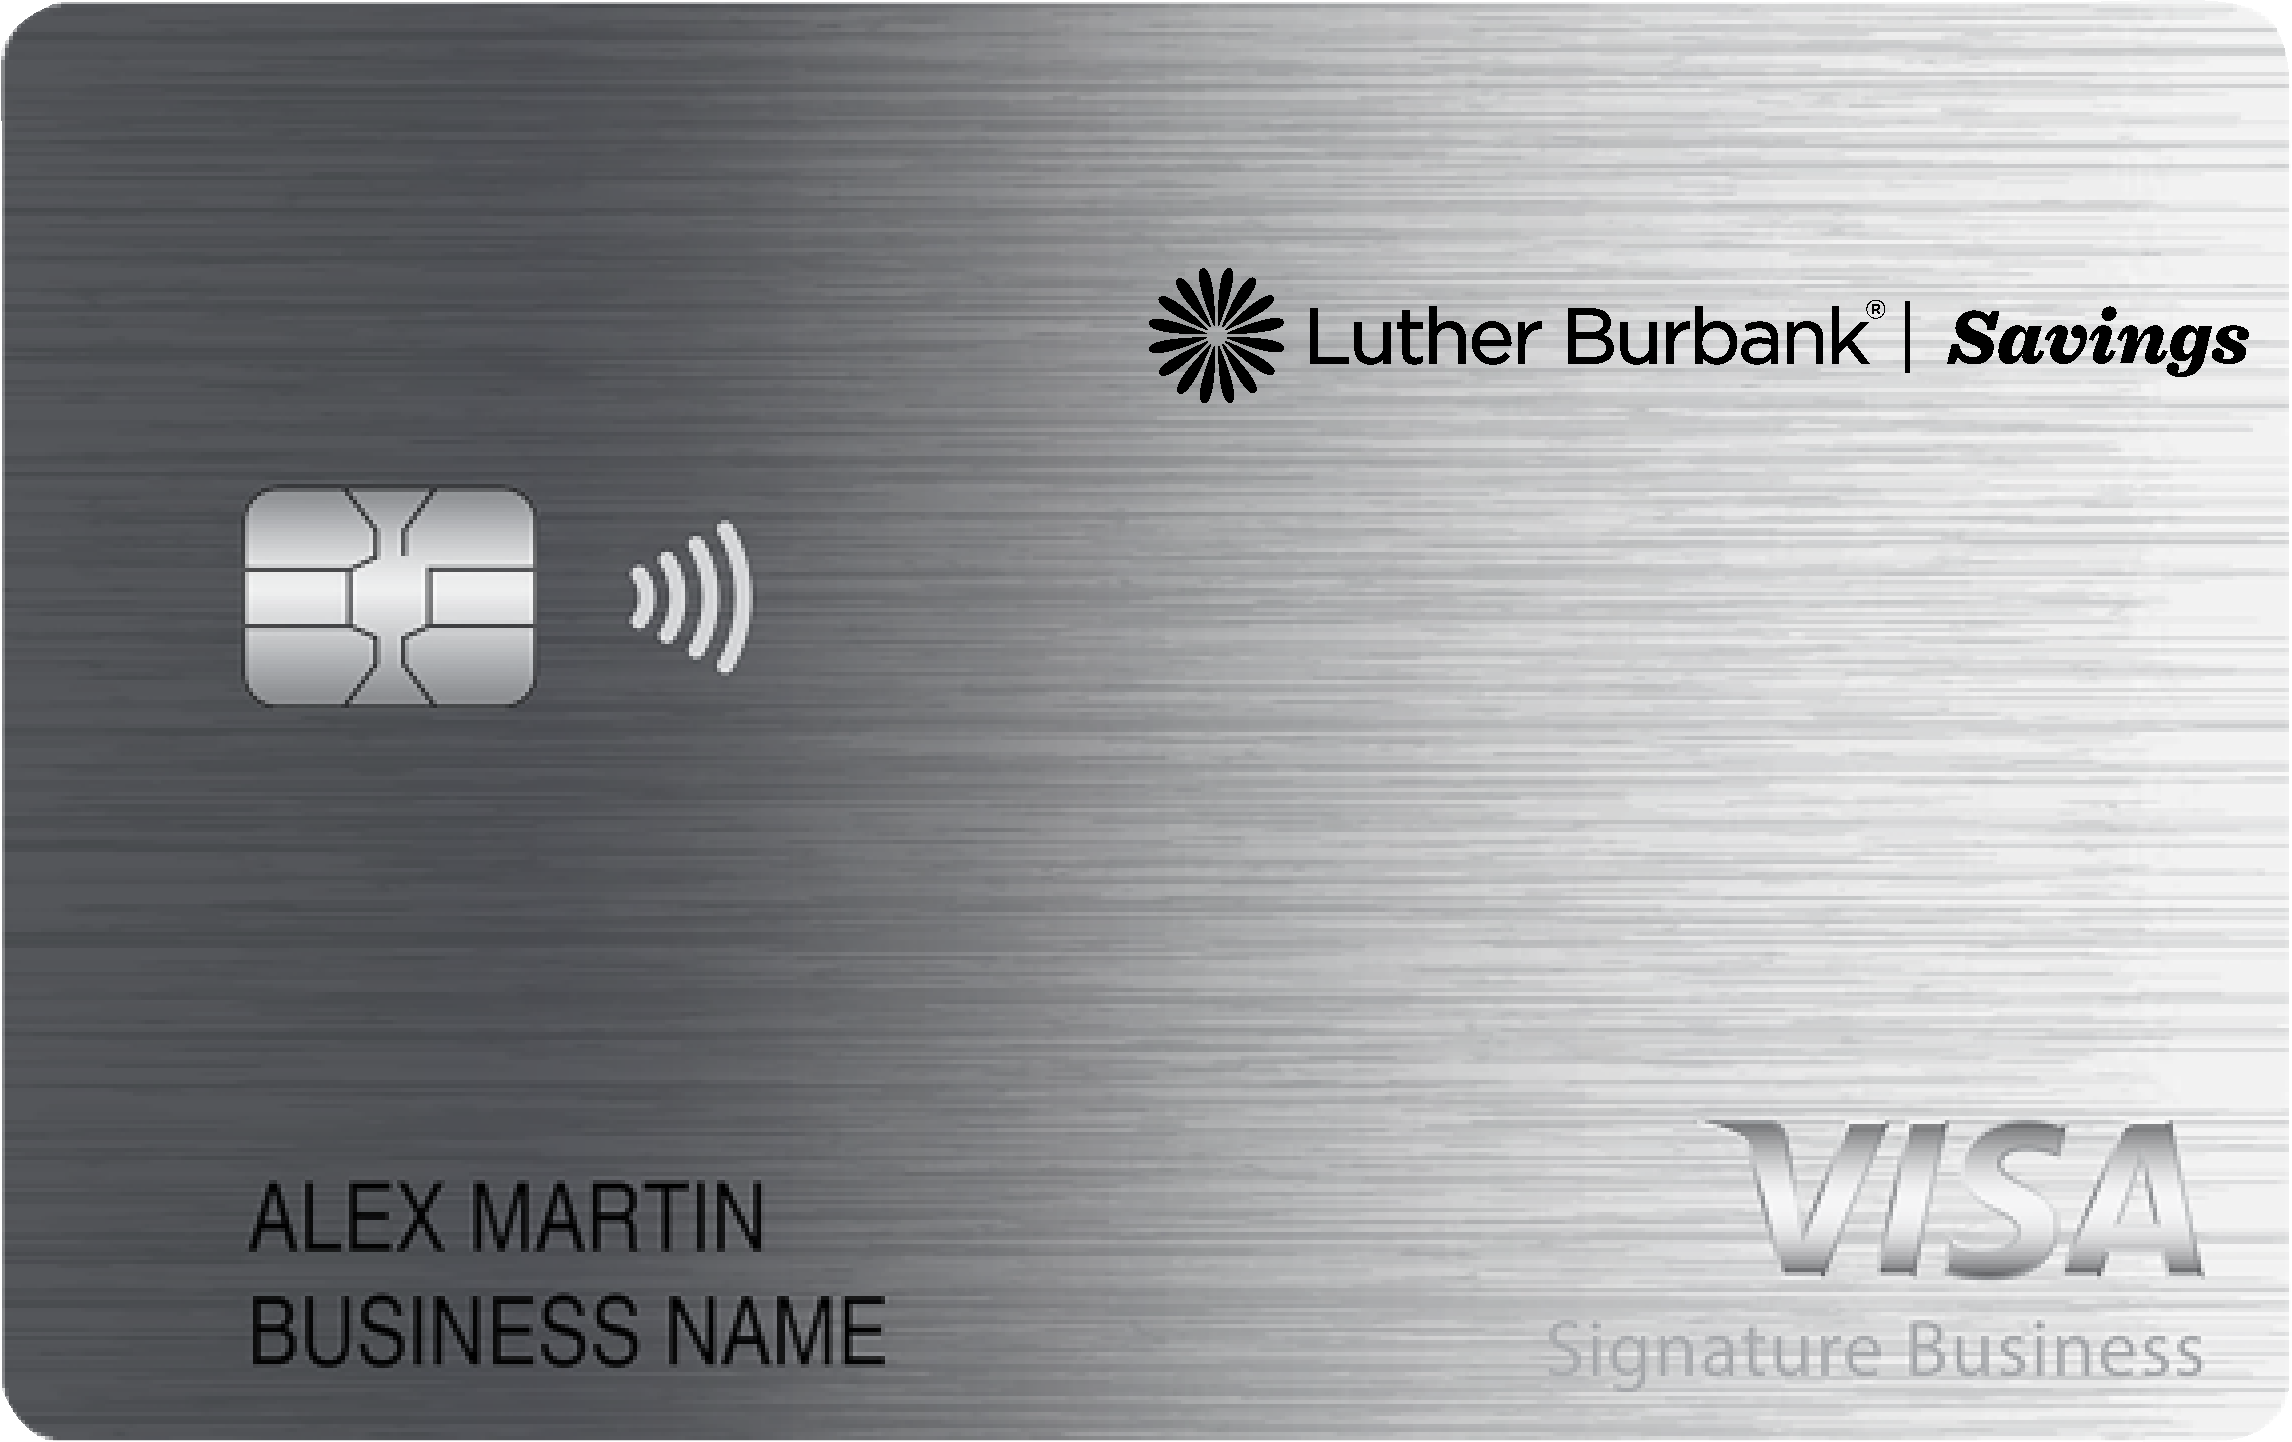 Luther Burbank Savings Smart Business Rewards Card